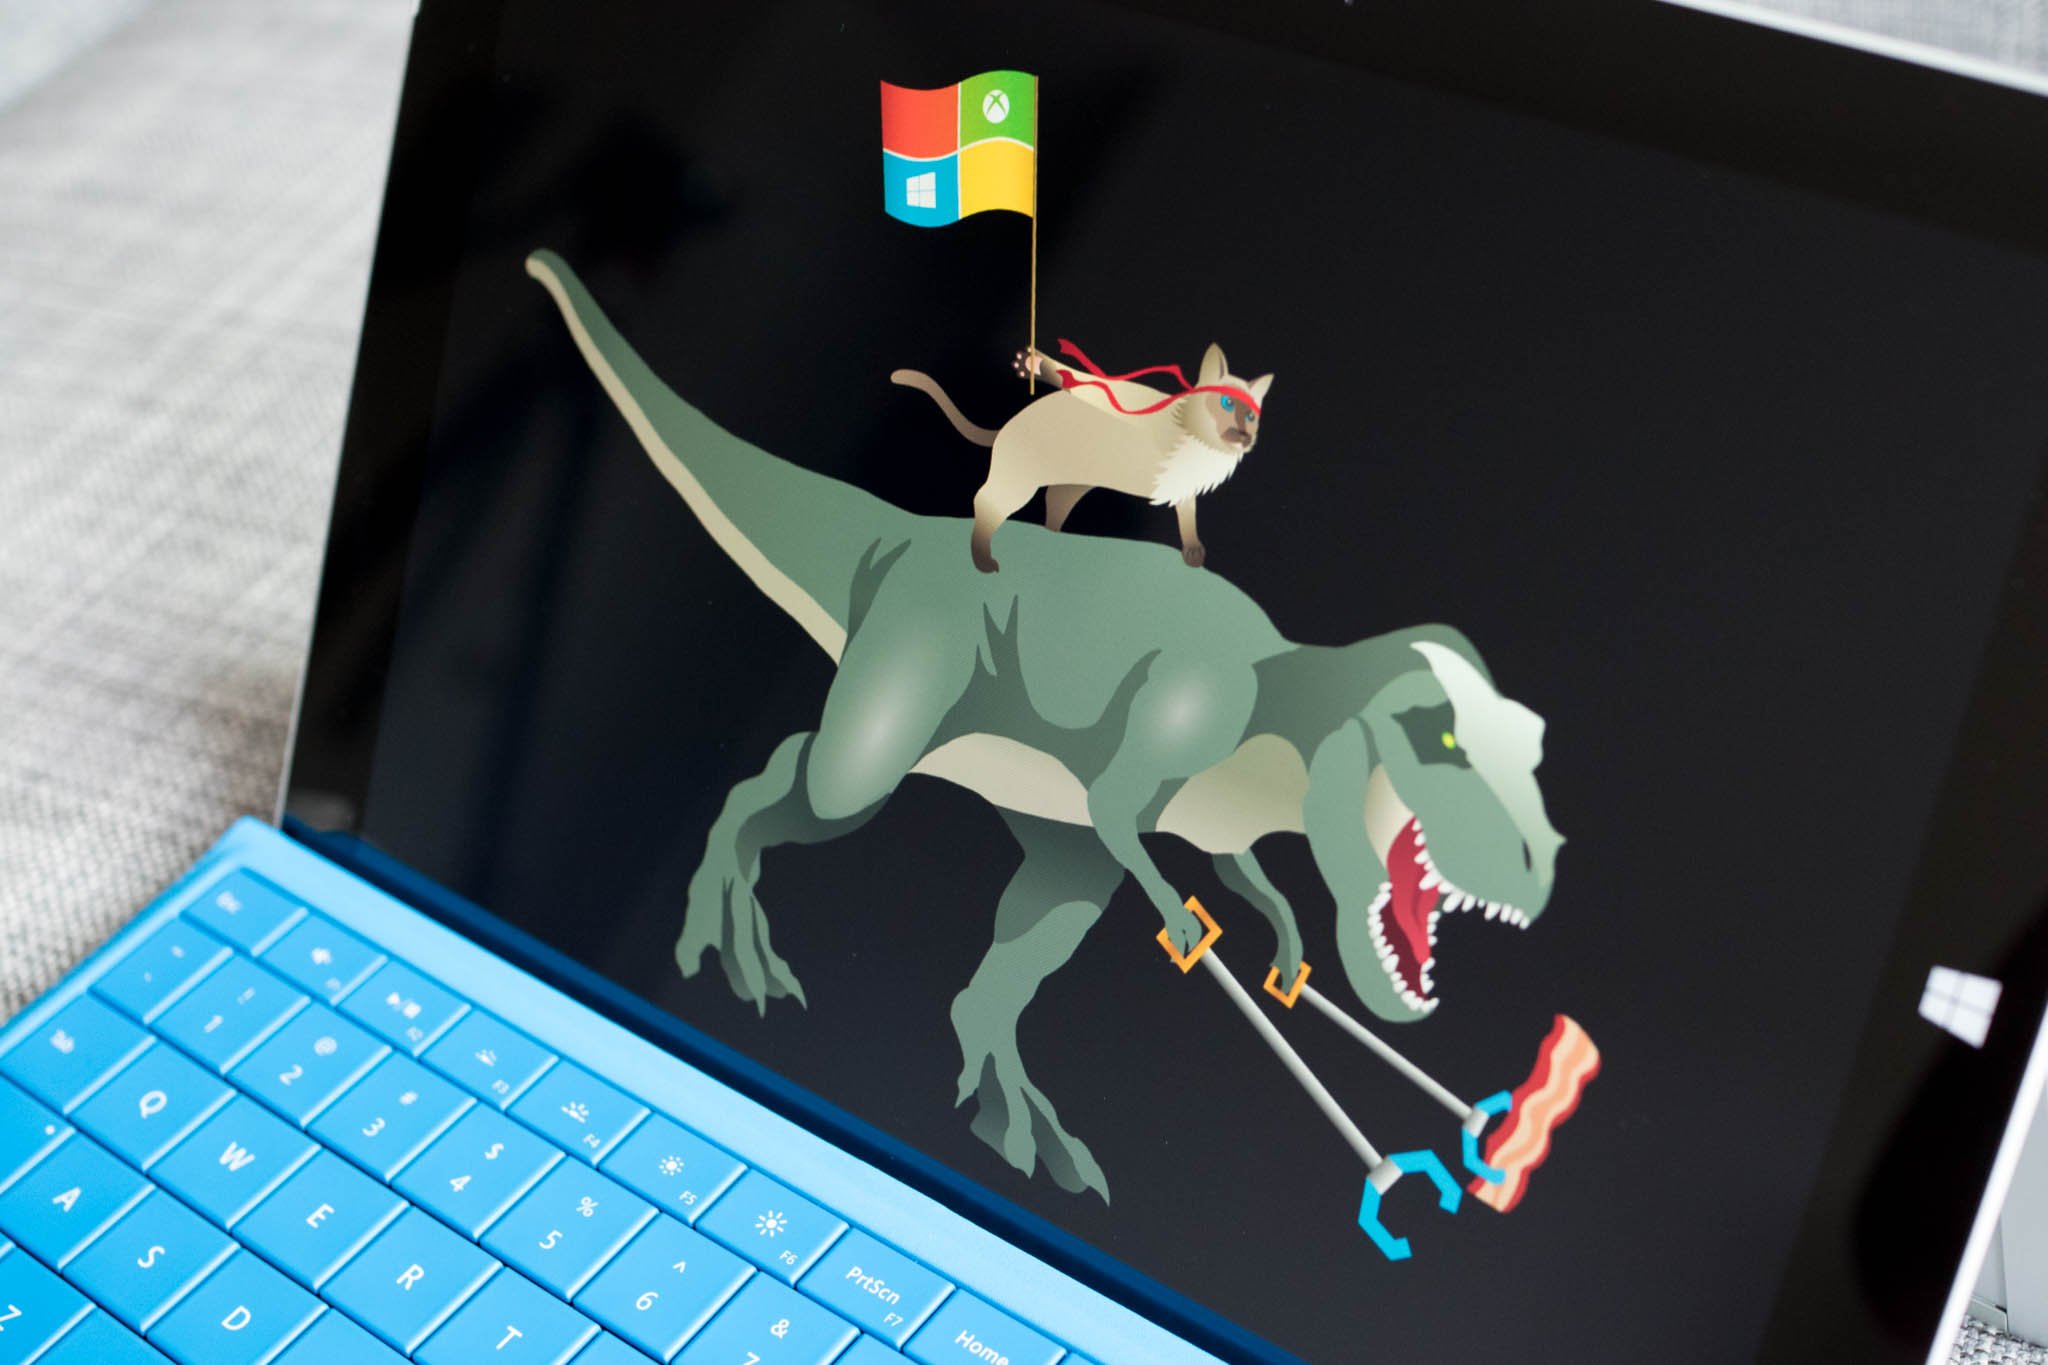 Microsoft profiles the mind behind Ninja Cat, KC Lemson